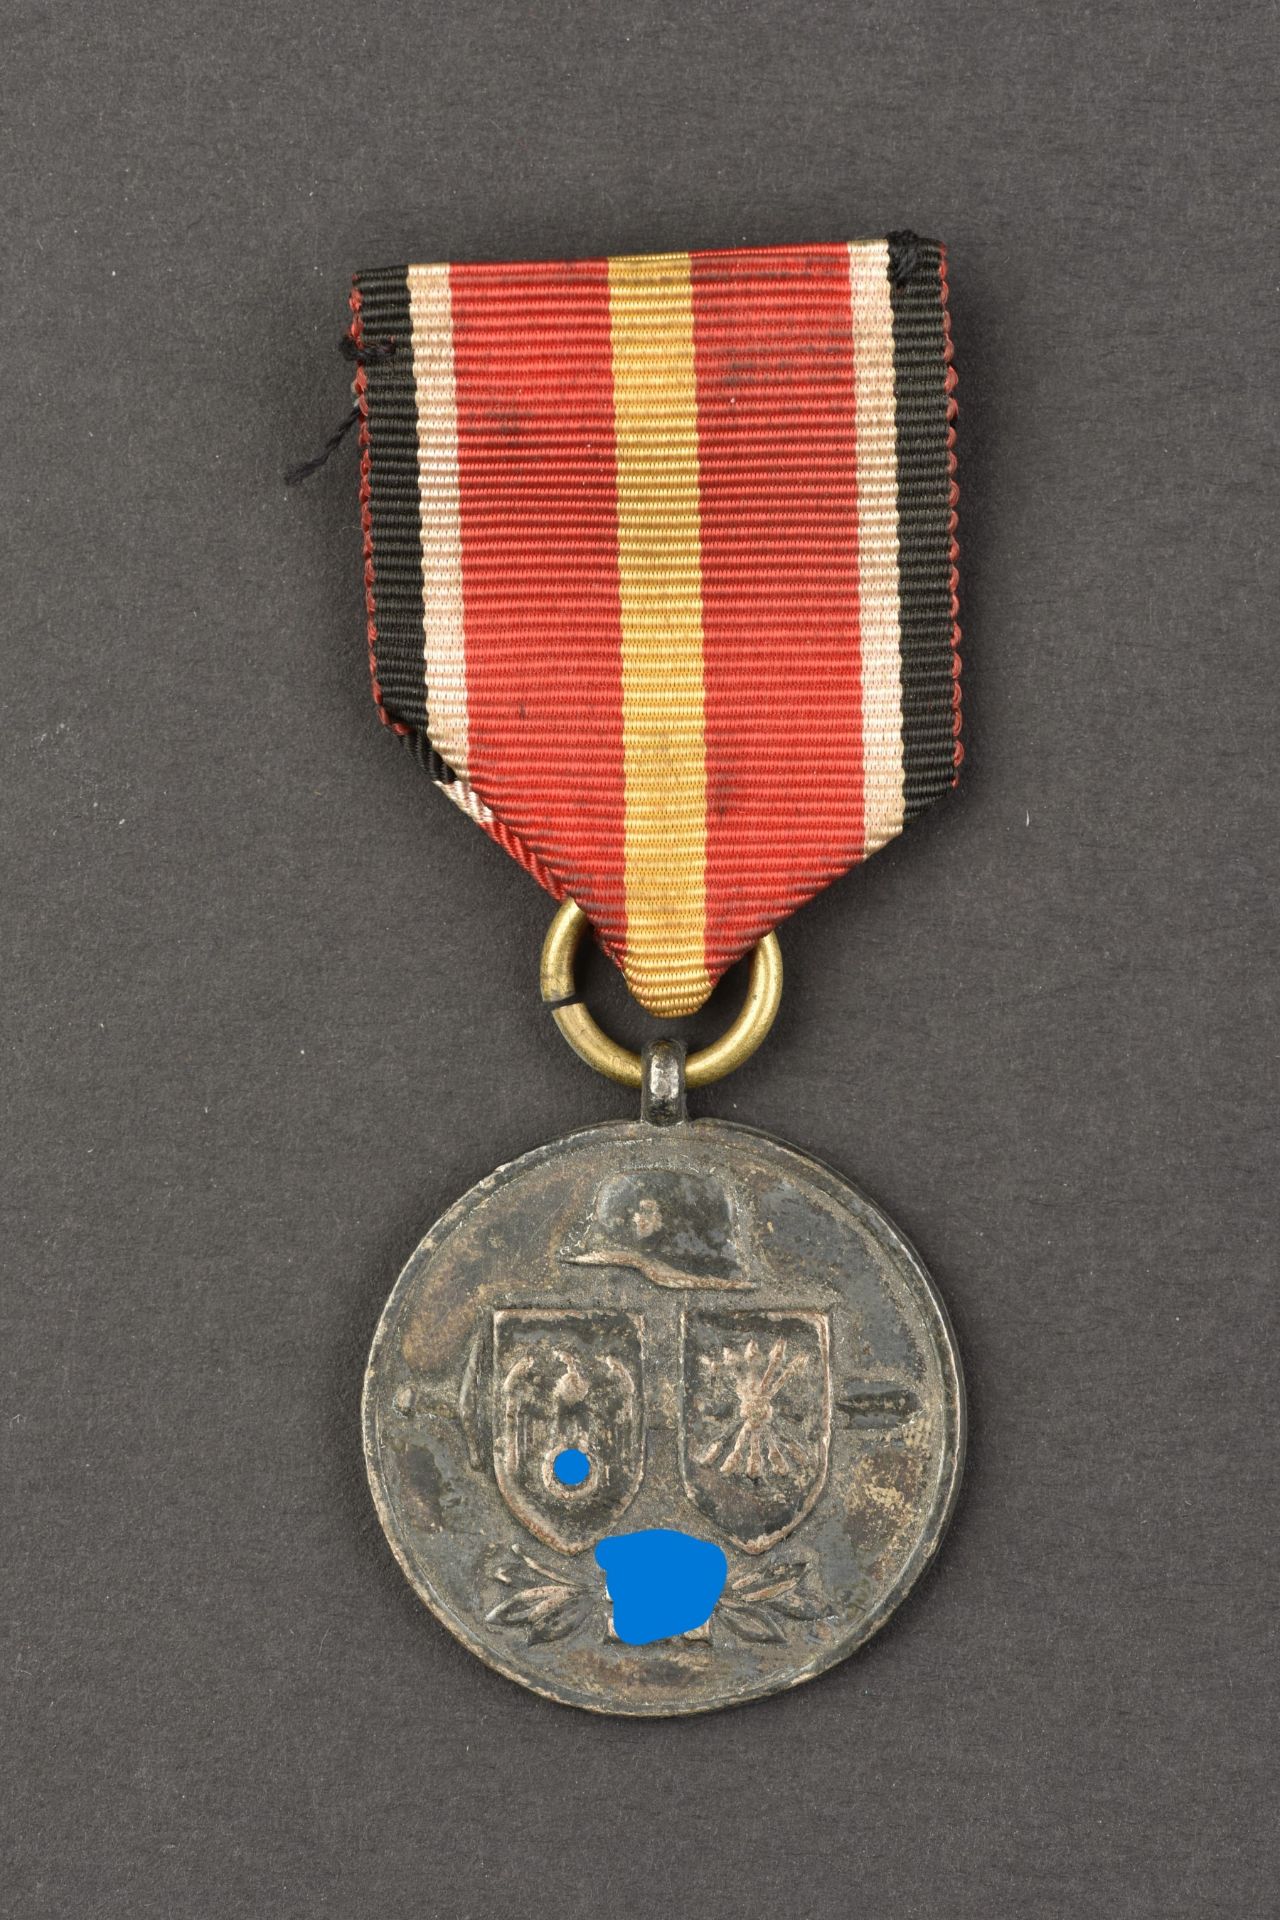 Medaille des volontaires espagnoles. Spanish Volunteer Medal.